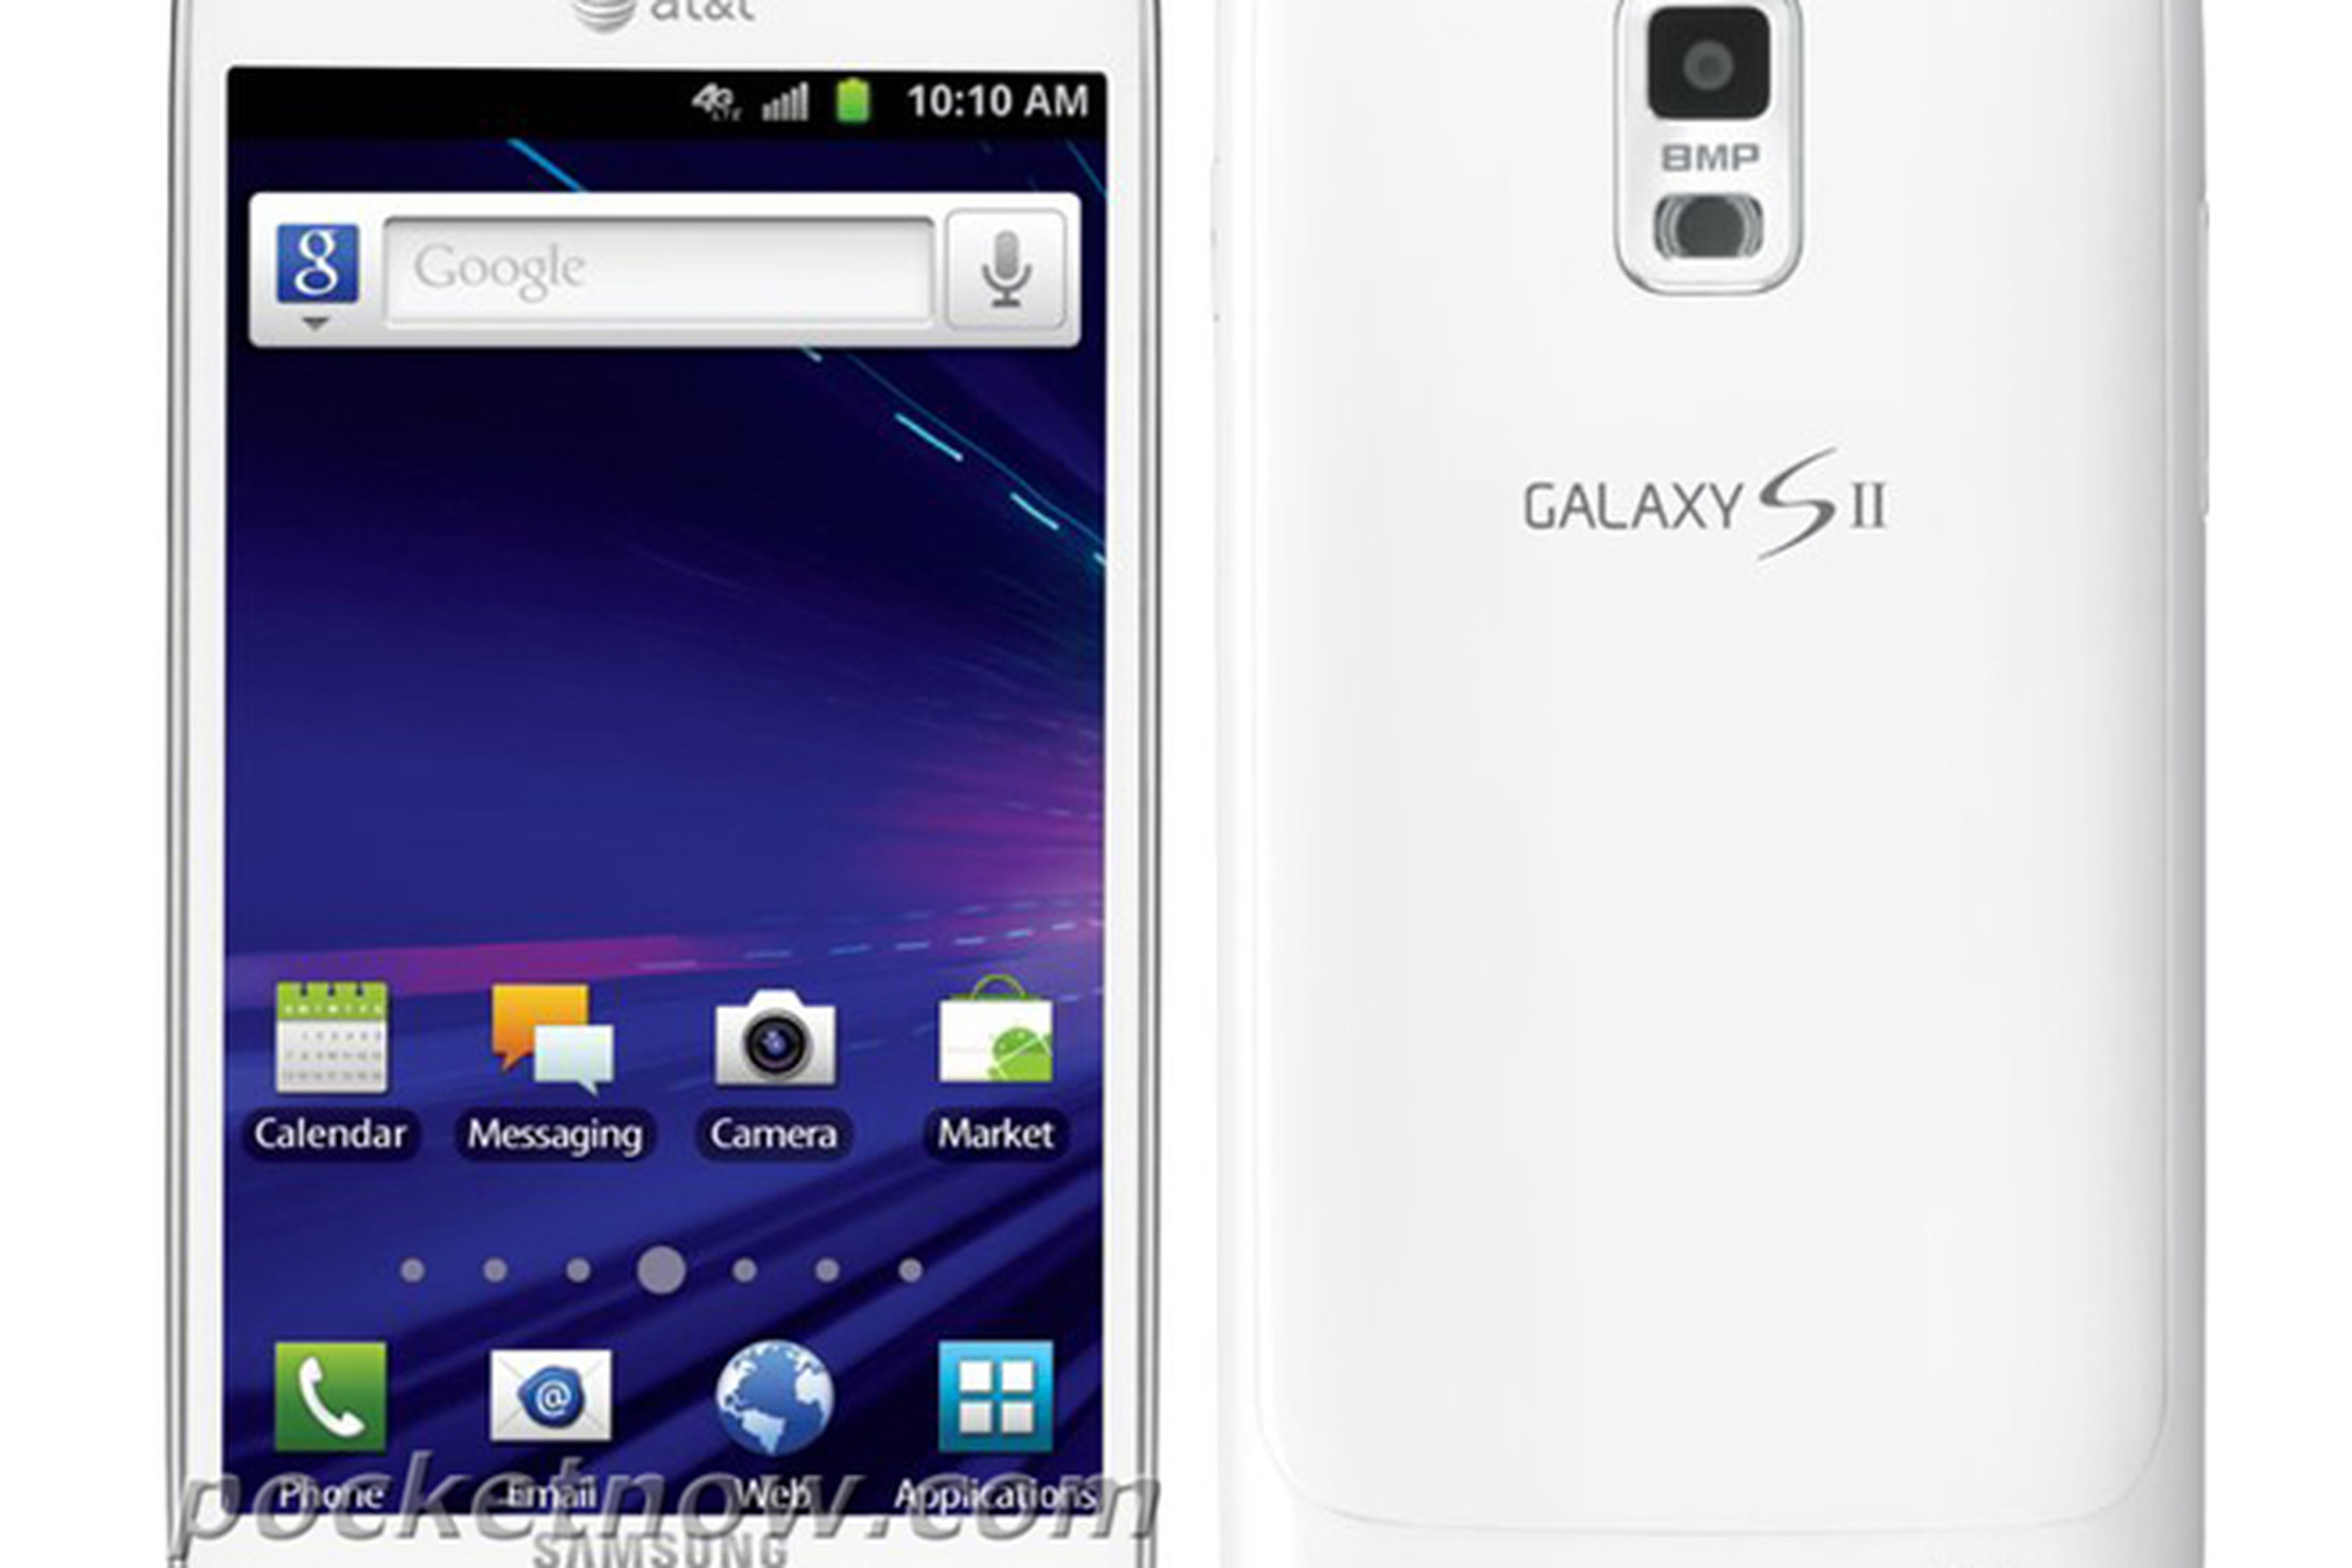 Samsung Galaxy S II Skyrocket White PocketNow